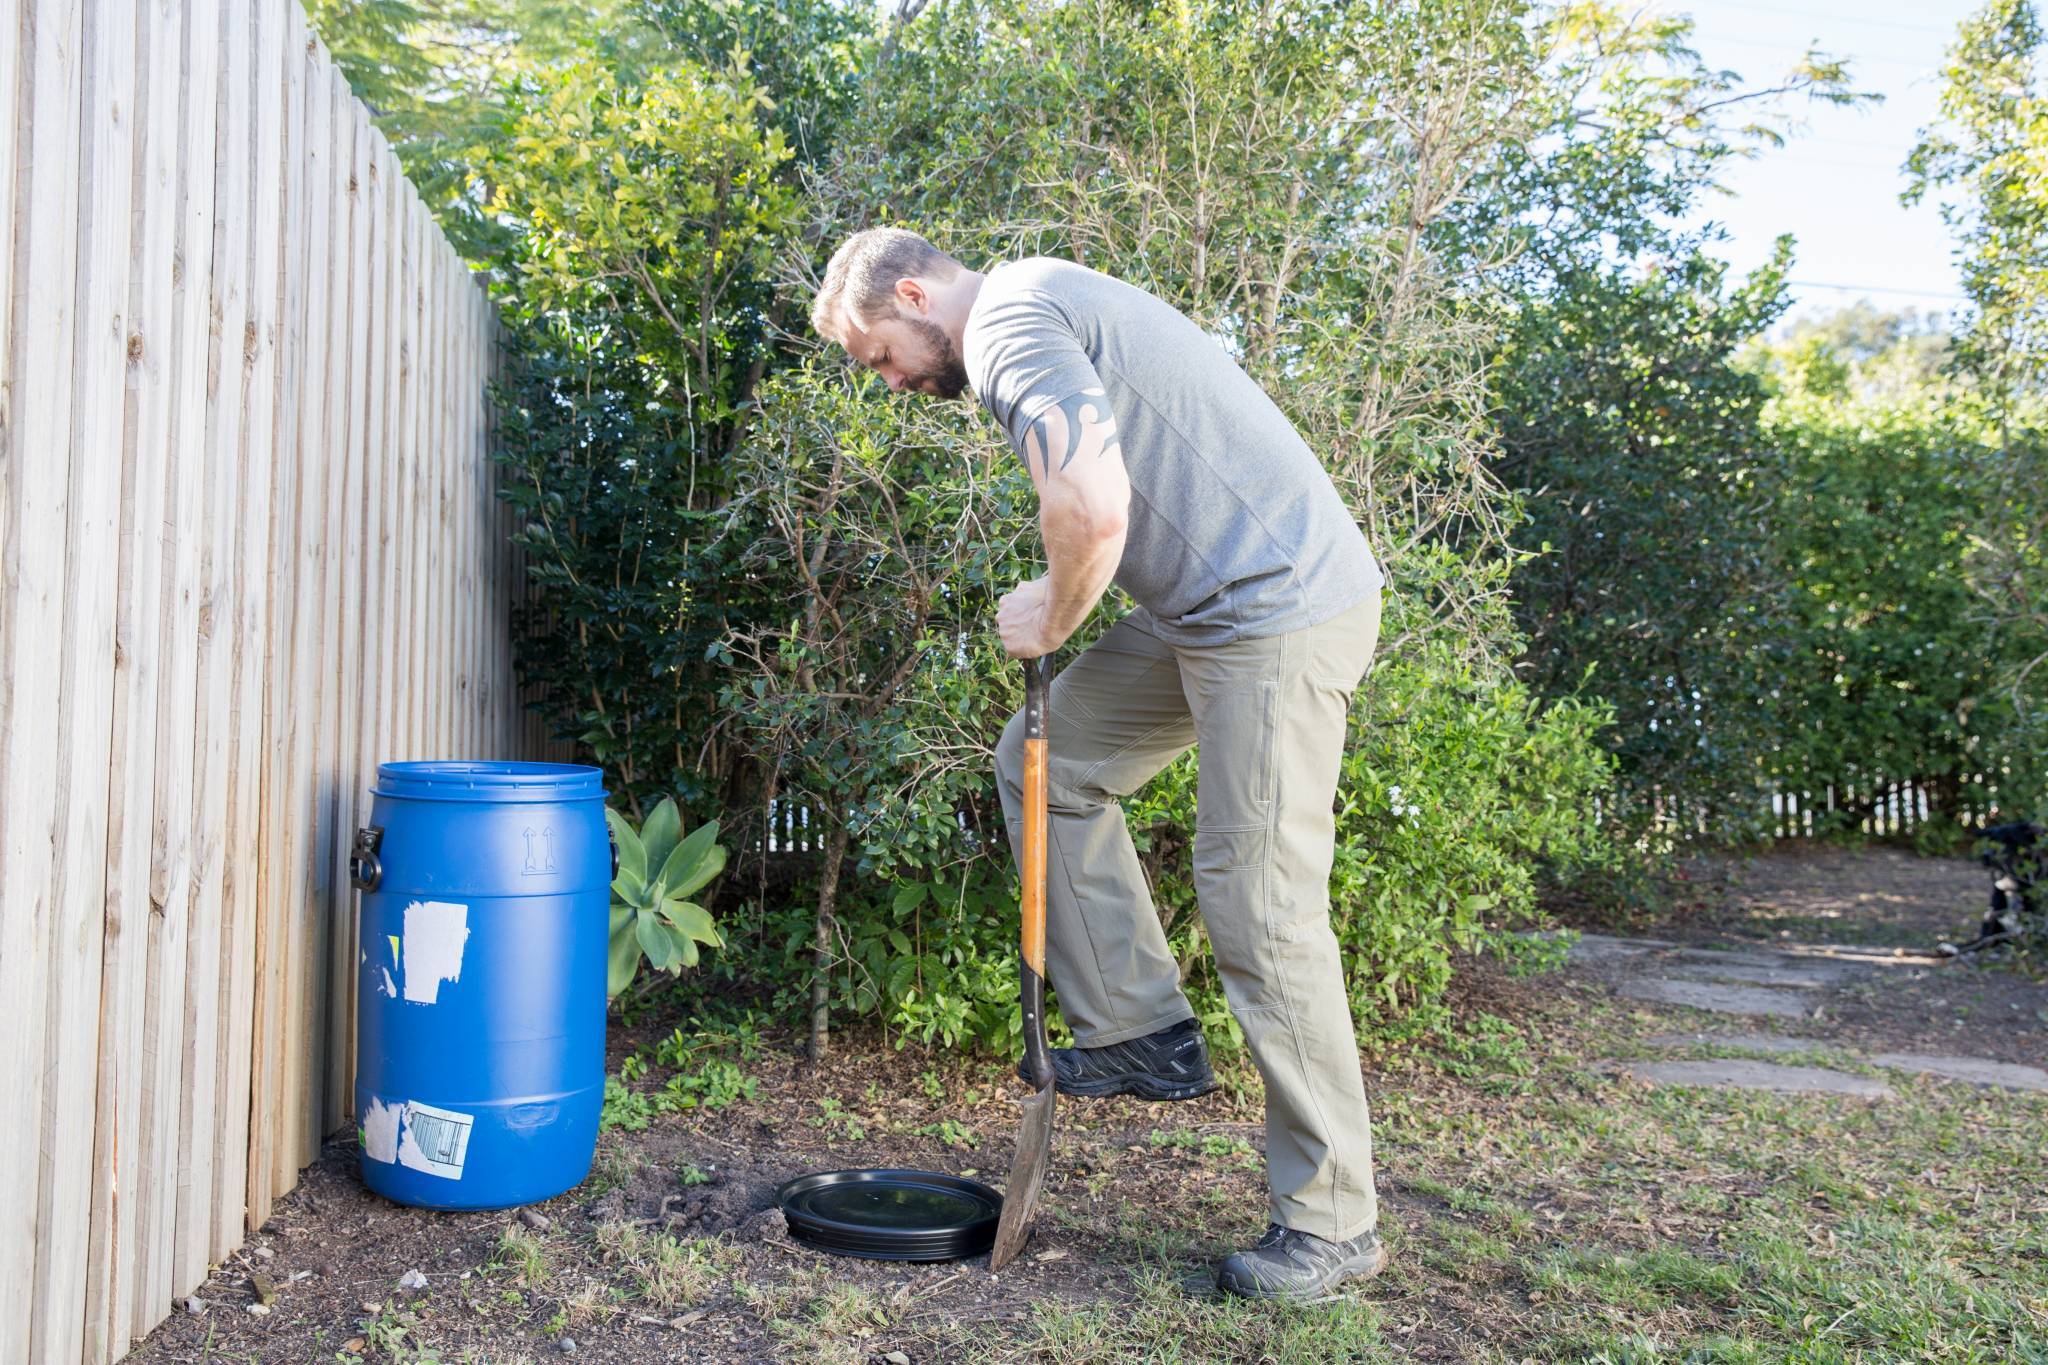 How To Make A Diy Dog Poo Compost The Green Hub